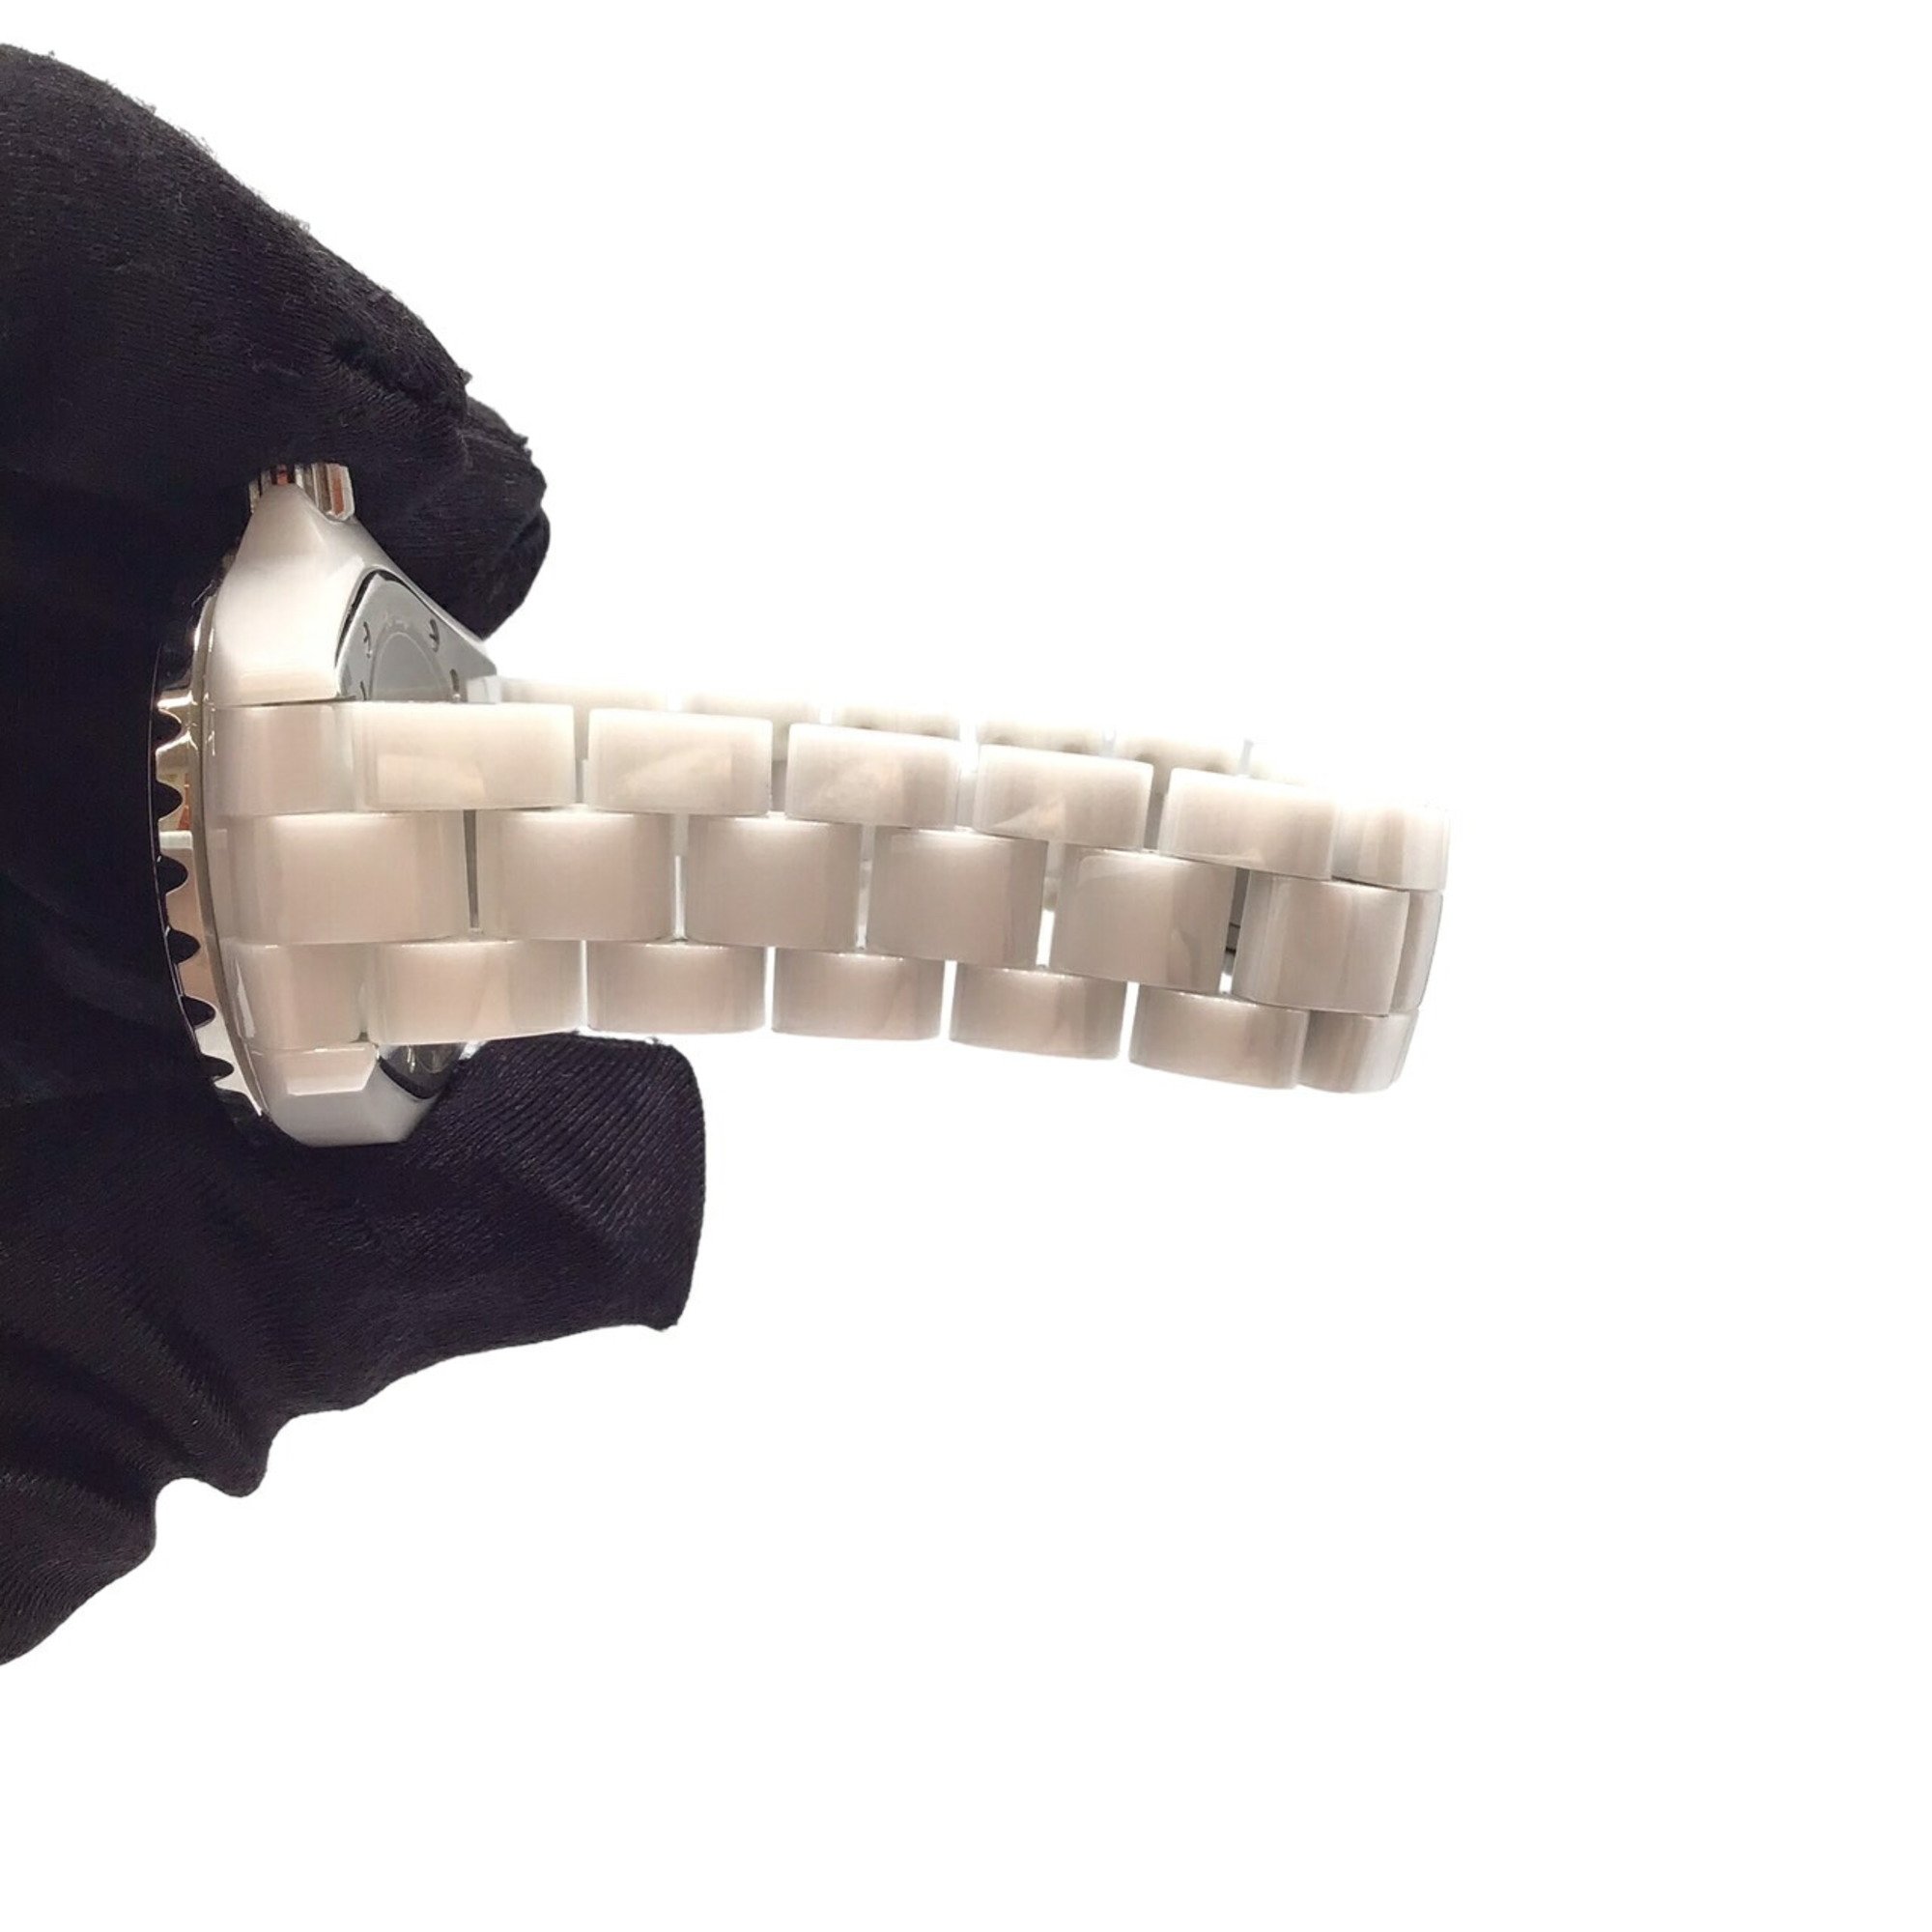 CHANEL J12 H1628 White Ceramic Diamond Index Date Change Quartz Battery Operated 33mm Wristwatch Watch Women's